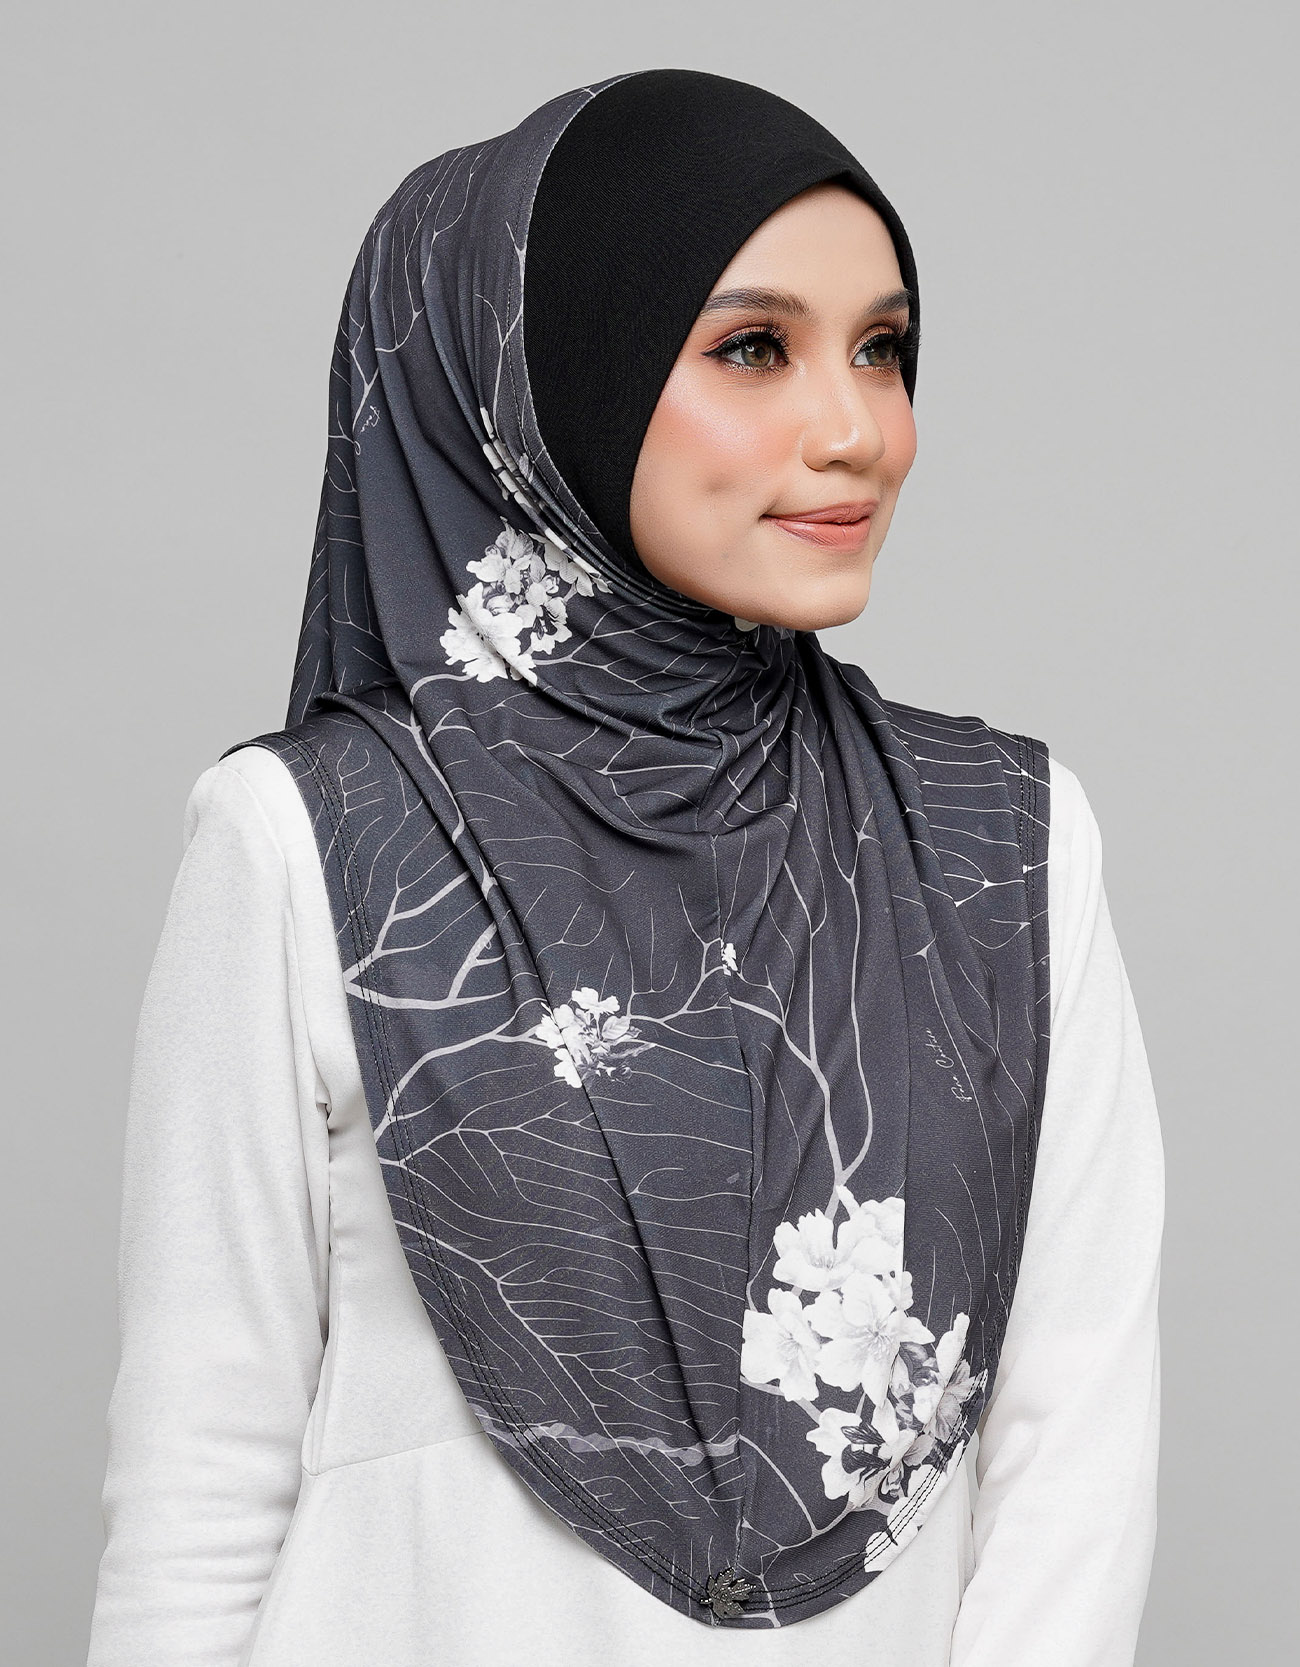 Express Hijab Damia Signature 03 - Black Edition&w=300&zc=1